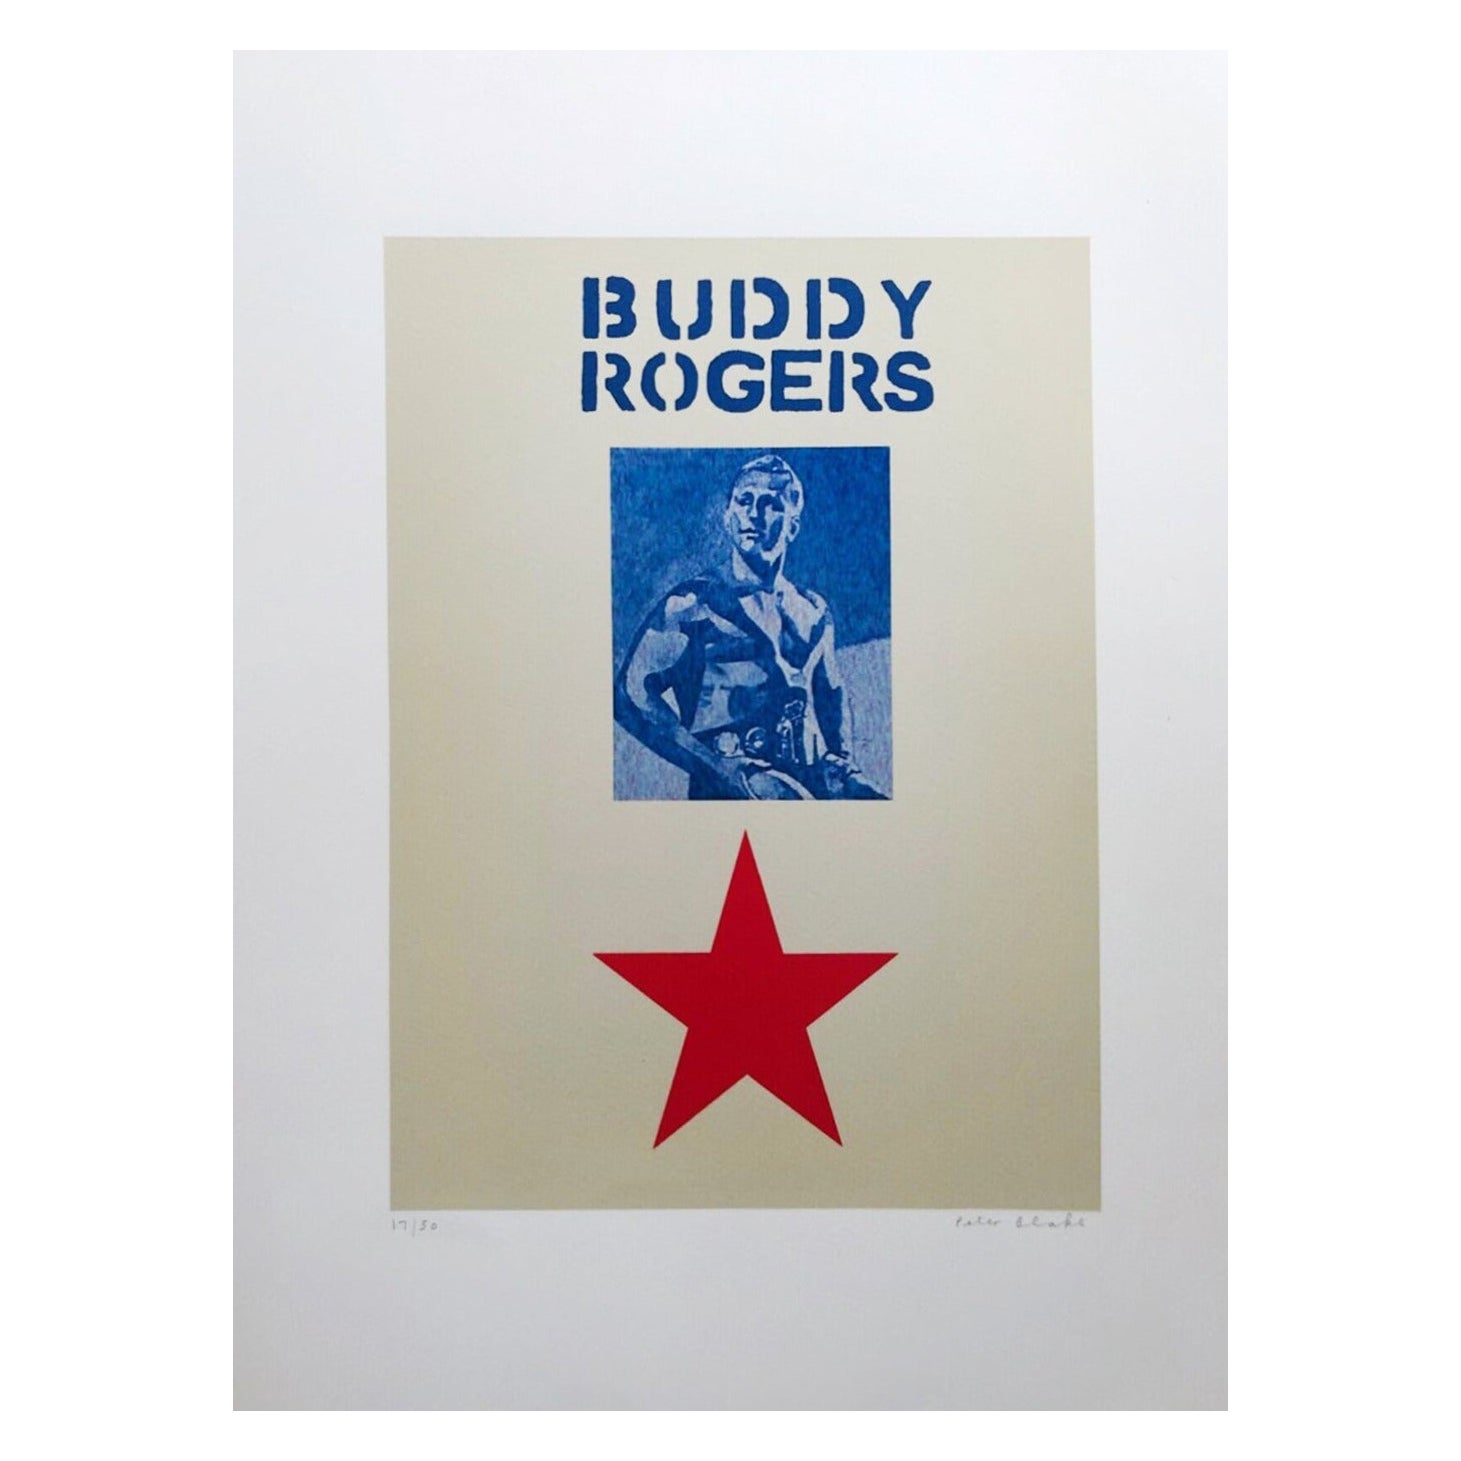 2003 Peter Blake - Buddy Rogers - Motiv 10 Original signierter Kunstdruck im Angebot